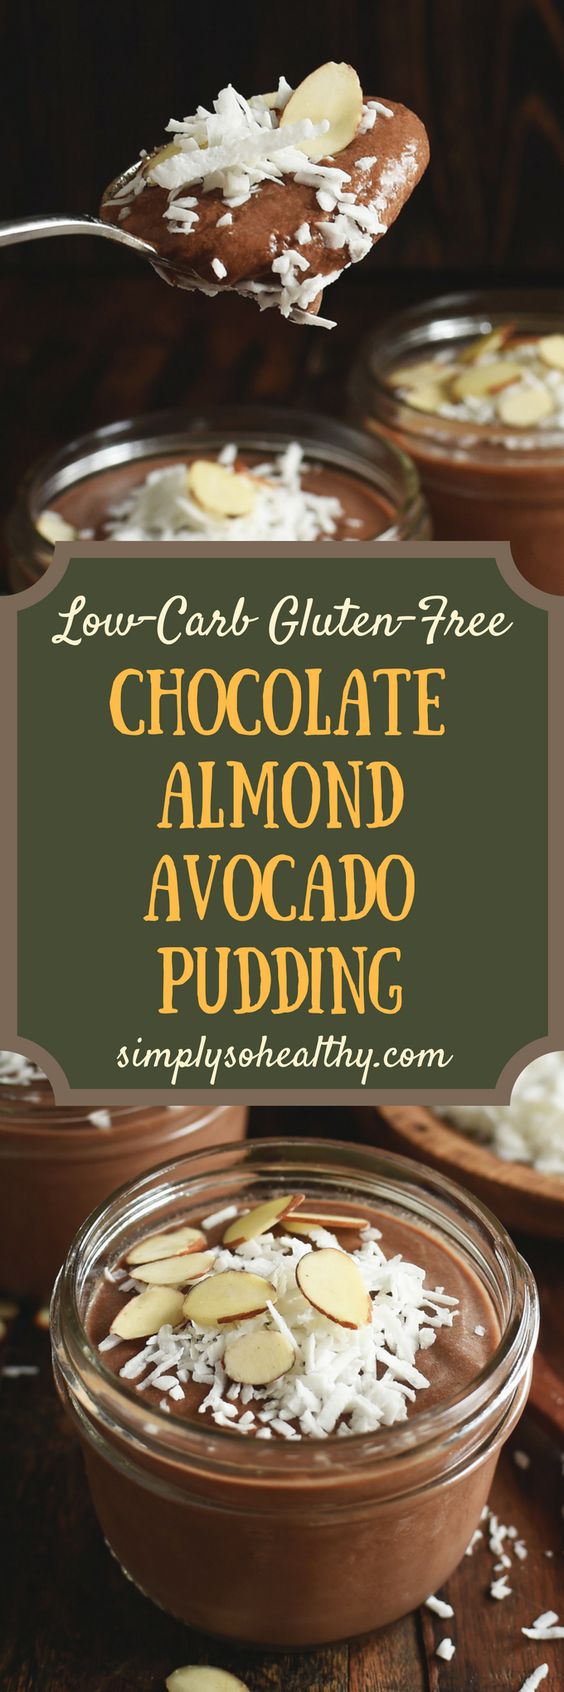 Chocolate, almond and avocado pudding recipe